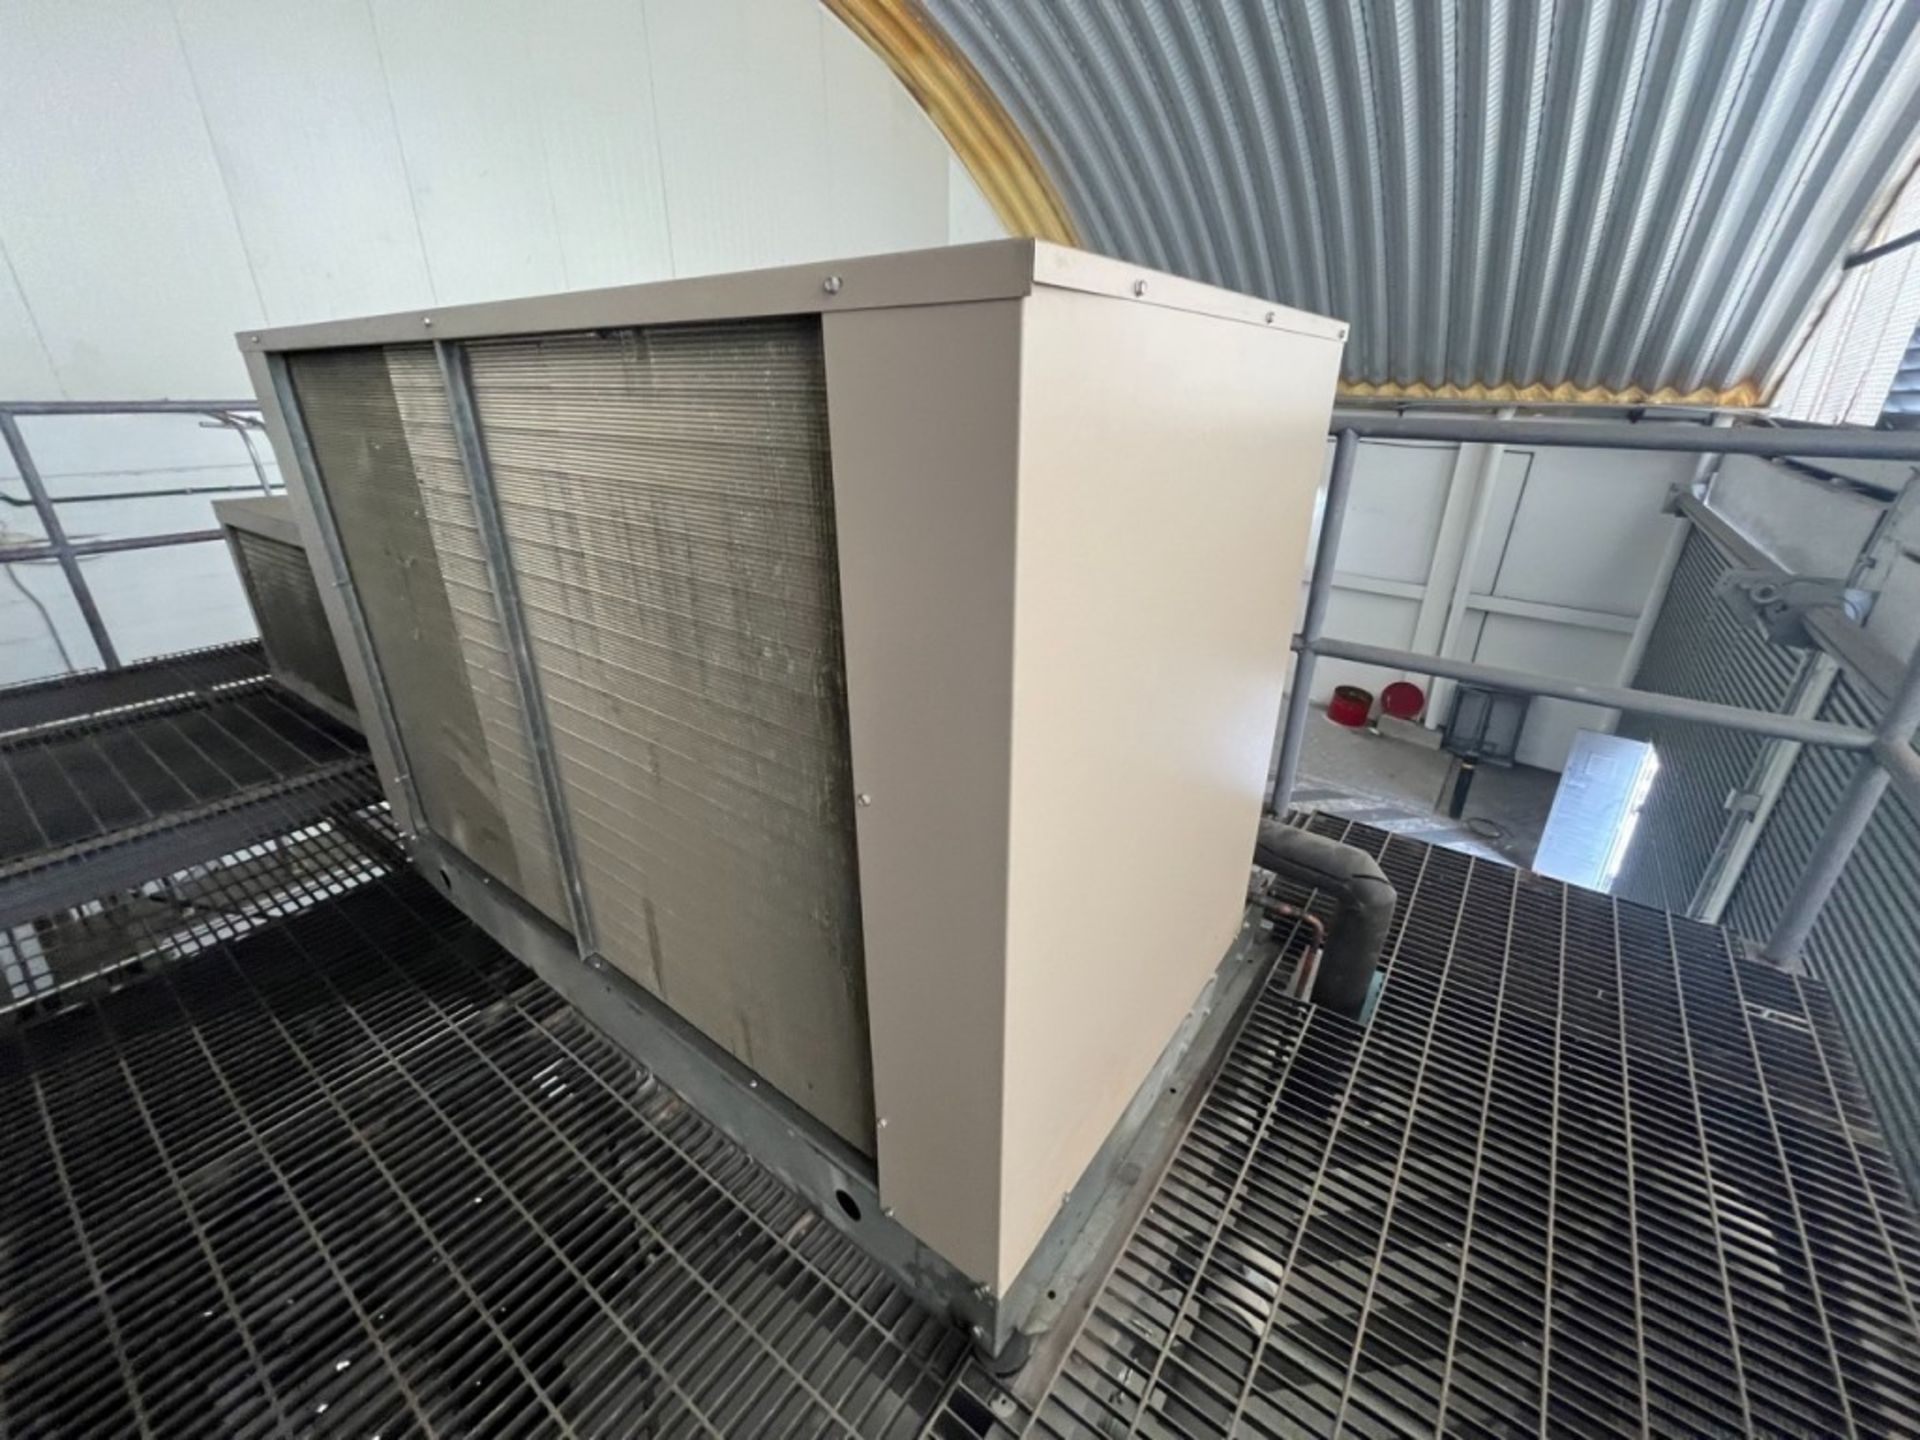 (NEW) Bohn refrigeration condensing unit, Model MBZX1500L6C, Serial No. M21K02616, 208-230V 60 Hz - Image 5 of 22